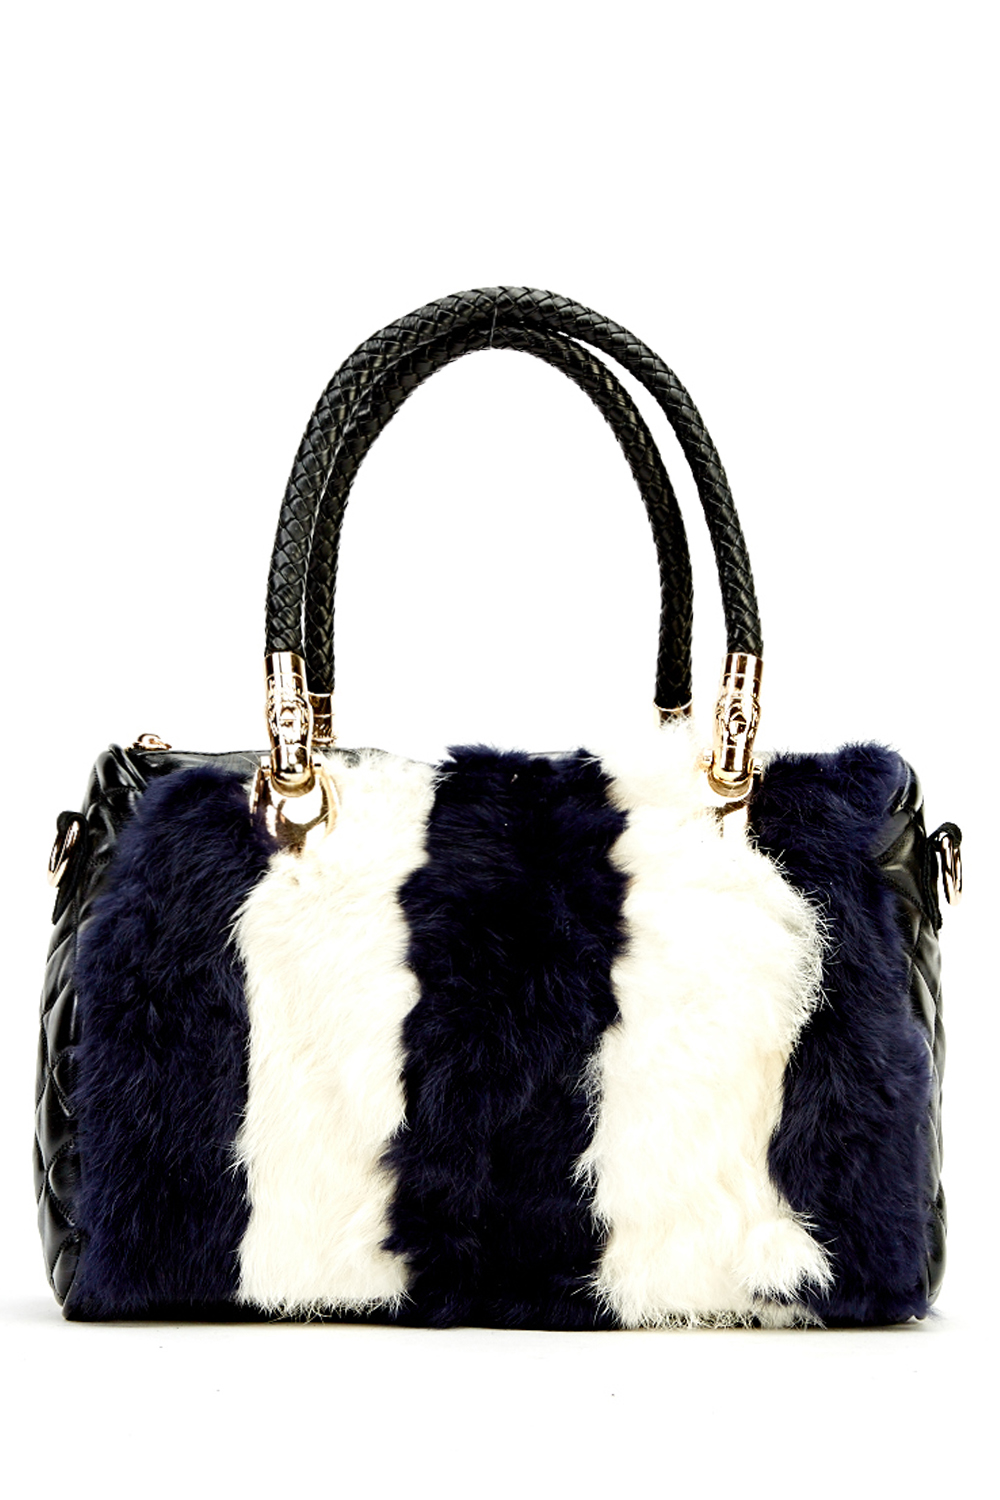 Striped Fluffy Faux Fur Handbag - Just $7